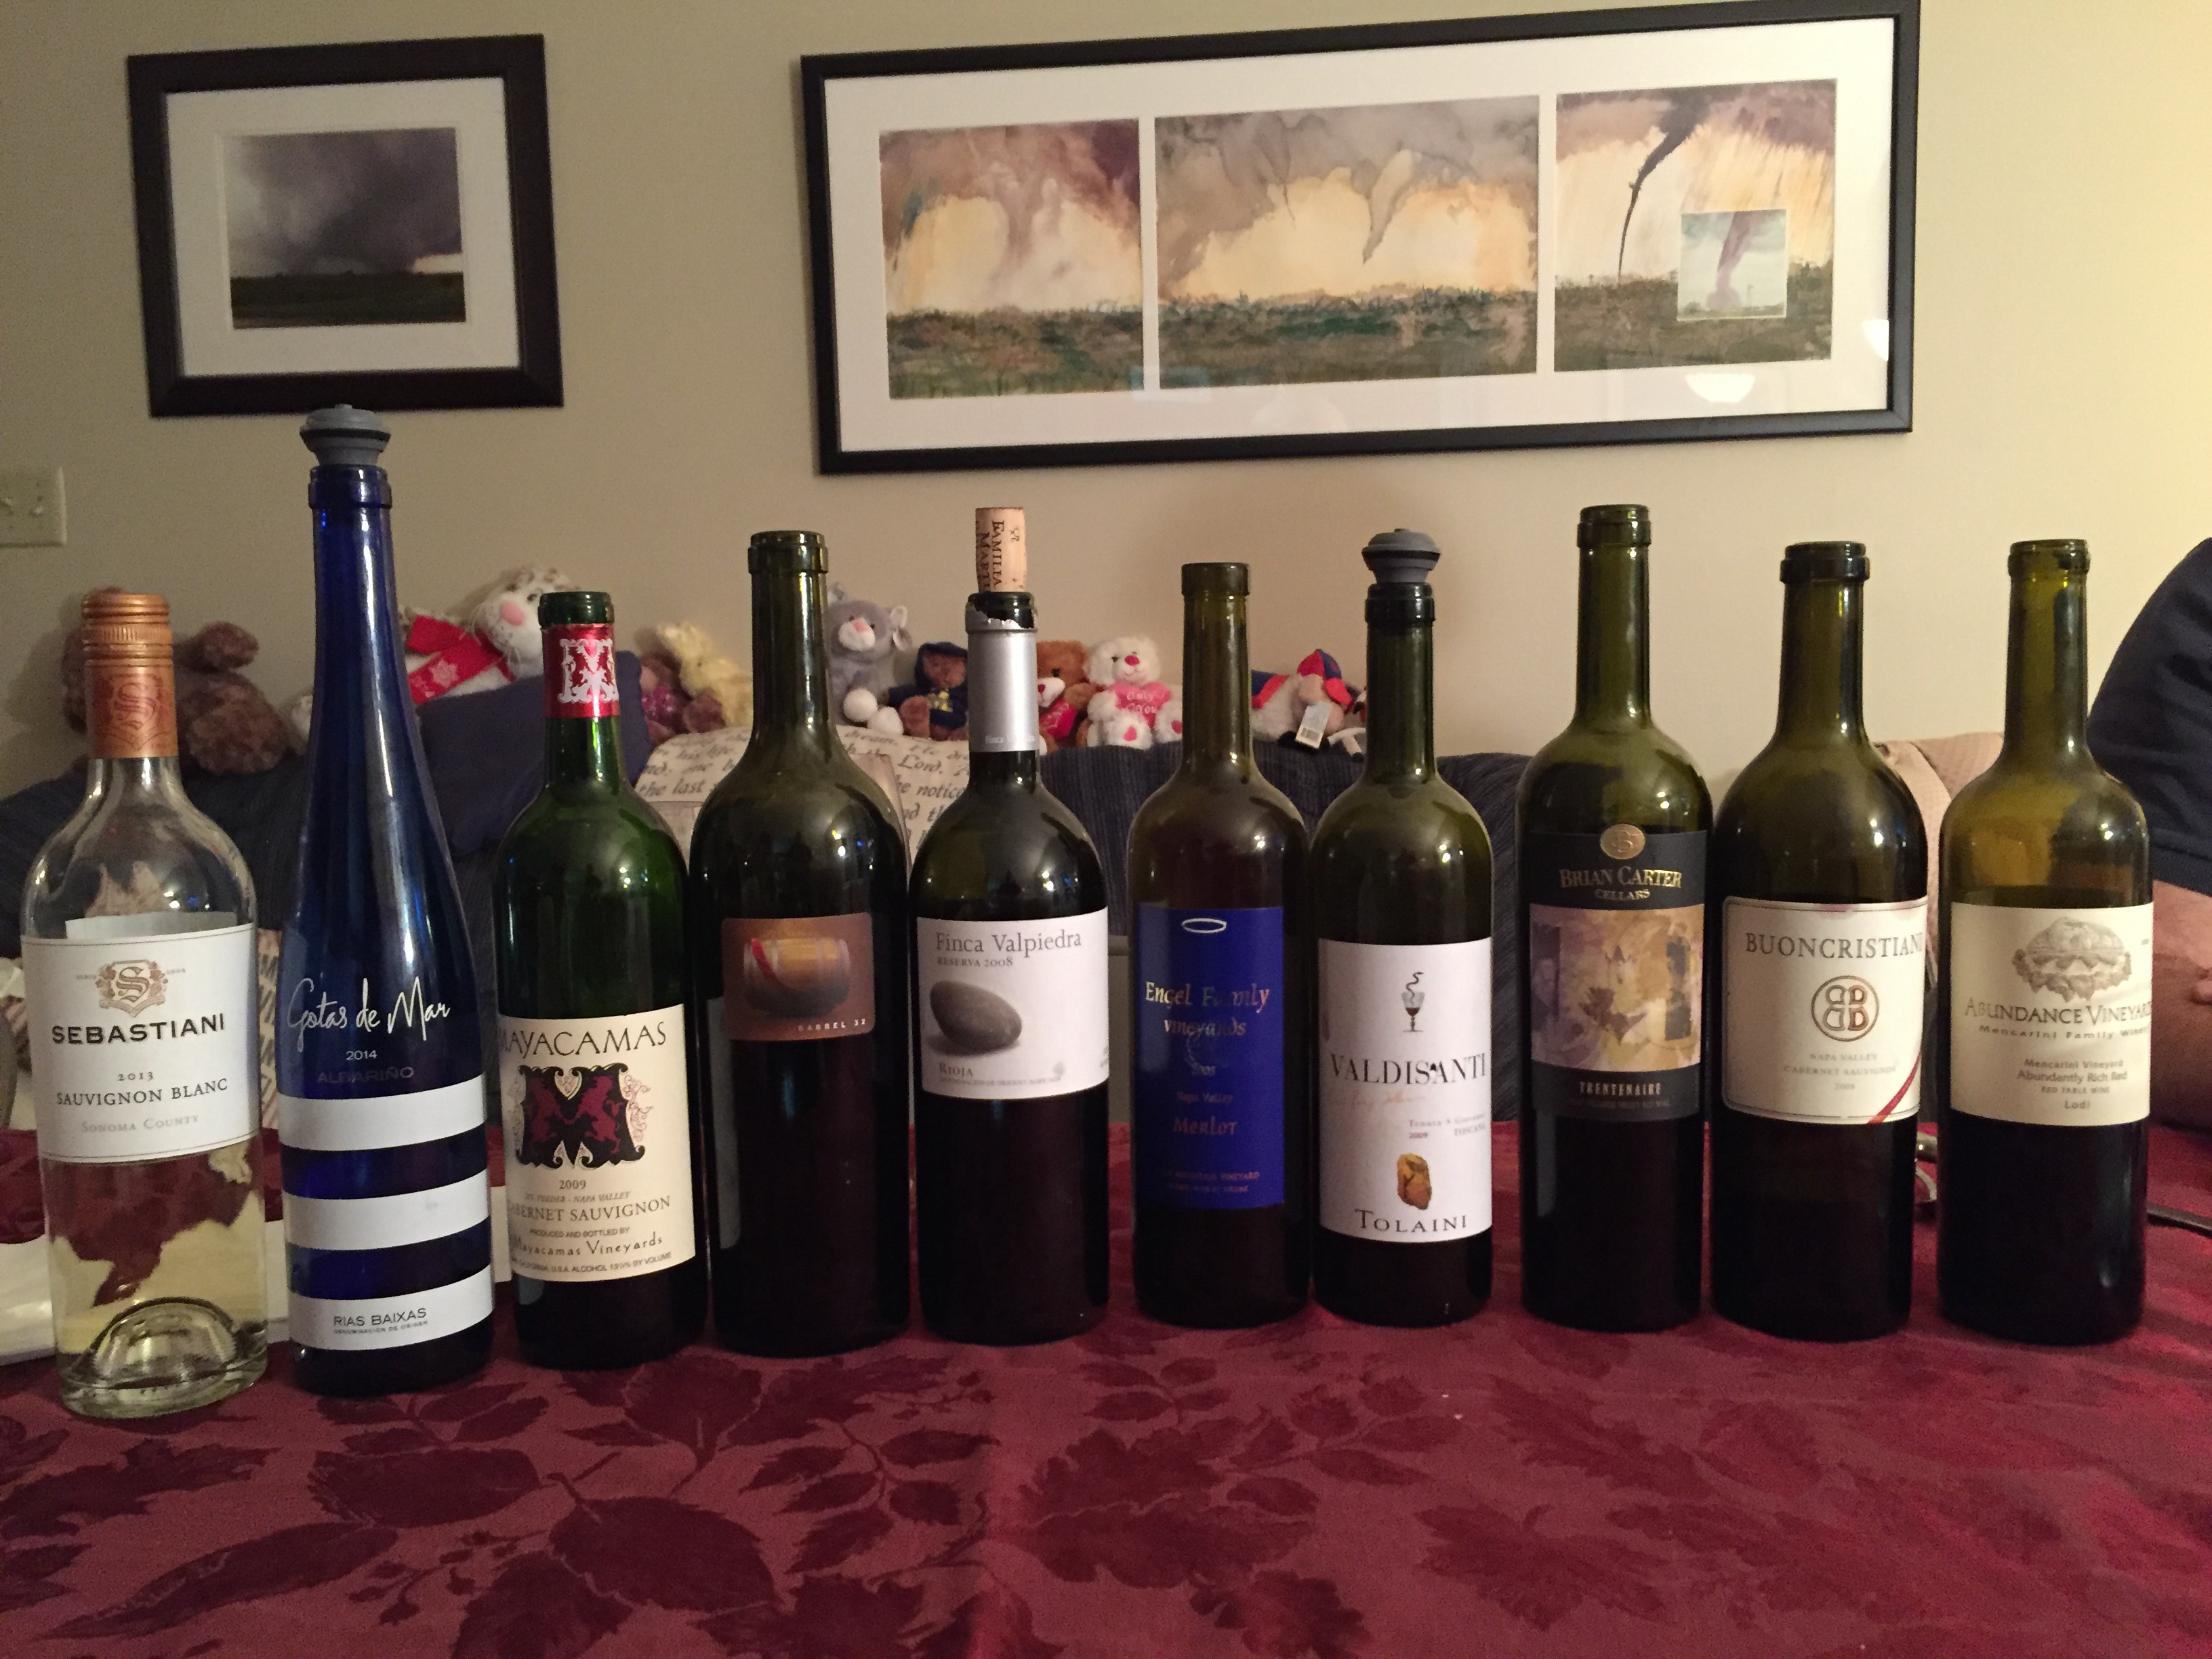 Just a few bottles of wine!